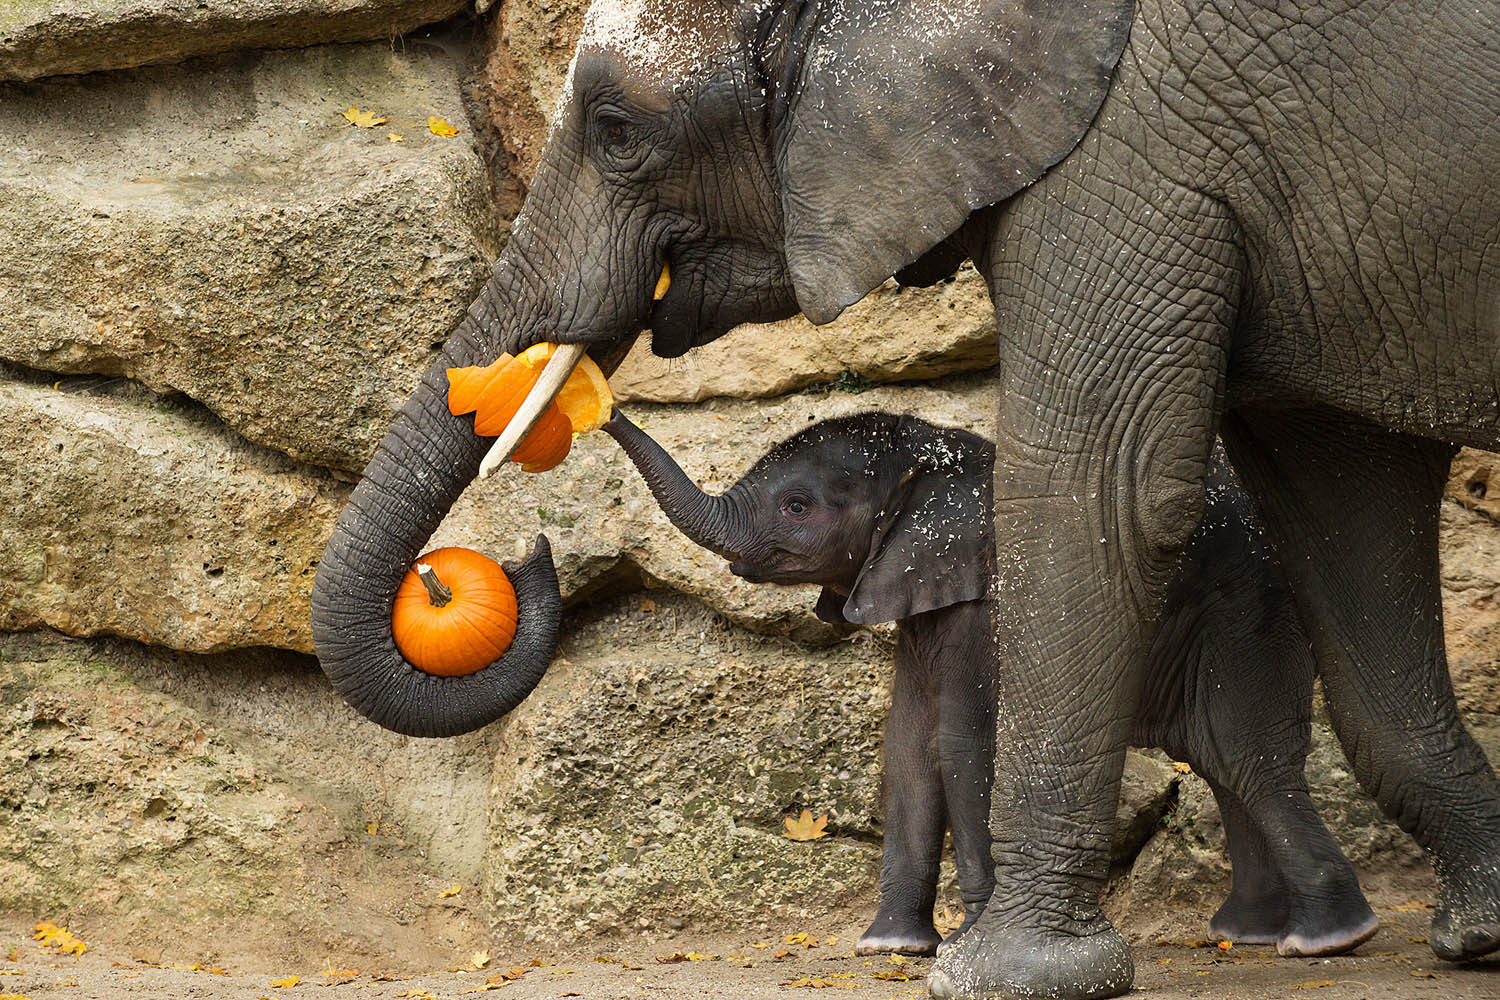 Oct. 28, 2013. Elephants eating a pumpkin ahead of Halloween at Schoenbrunn Zoo in Vienna, Austria.